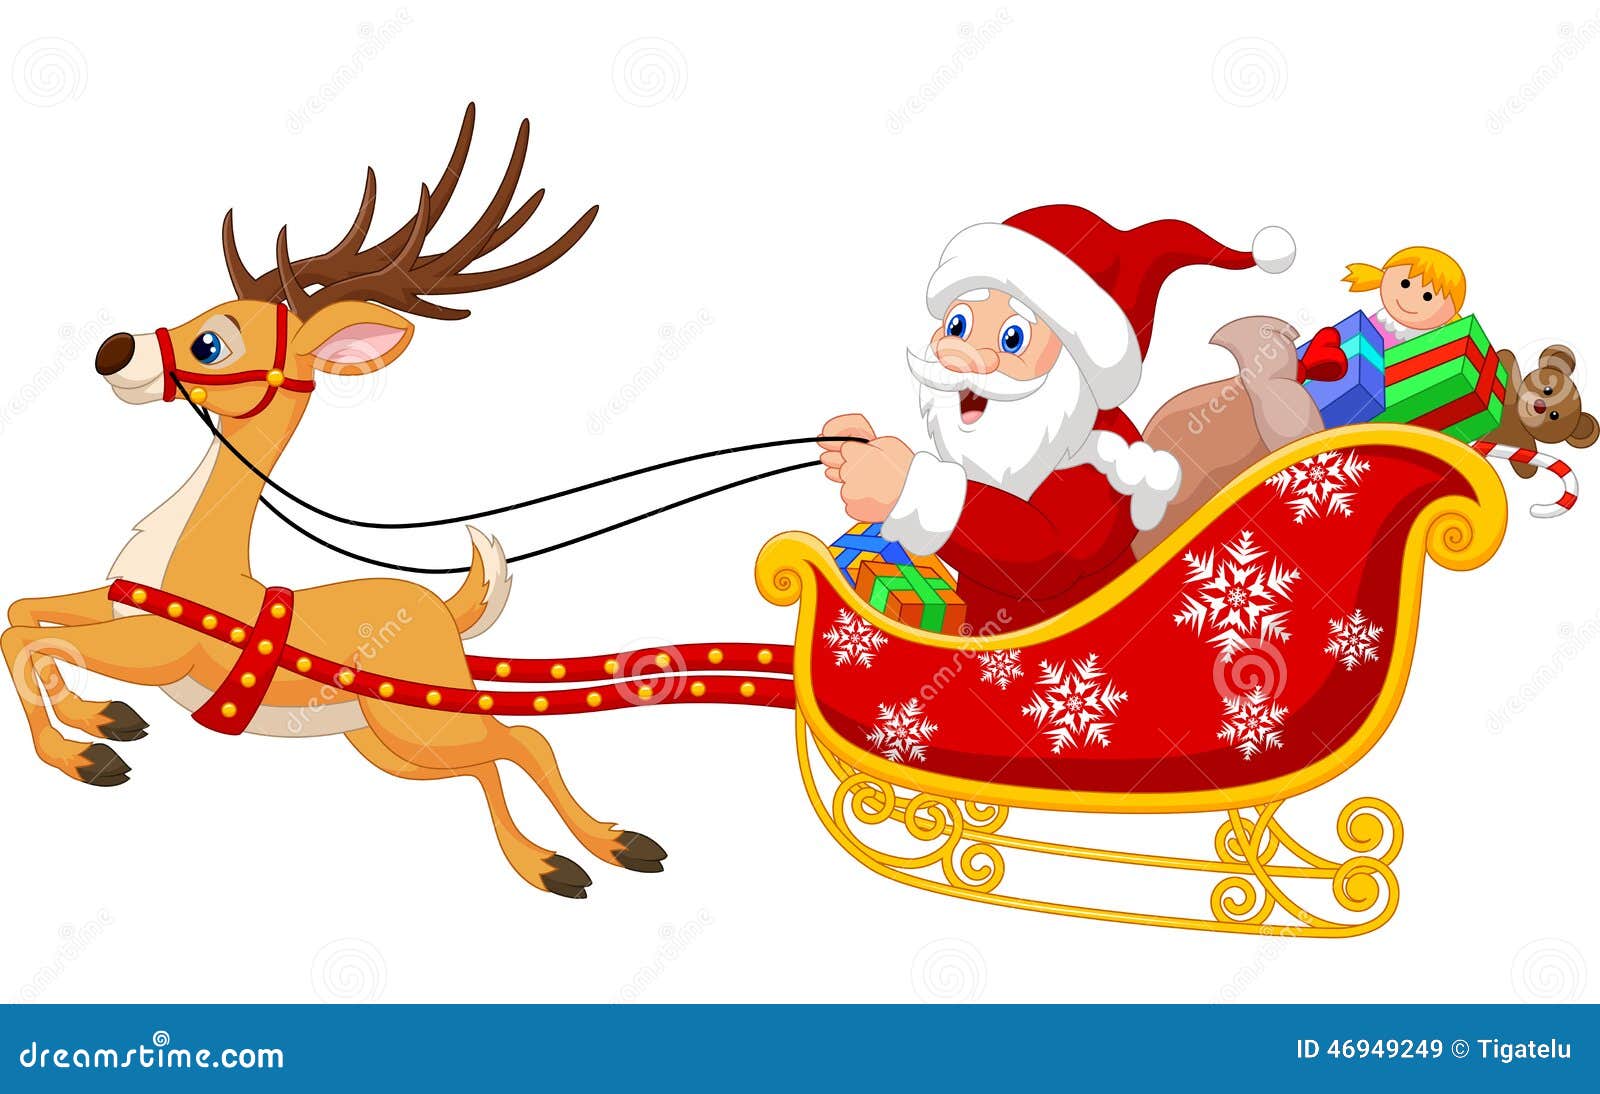 Santa in his Christmas sled being pulled by reindeer Royalty Free Vector